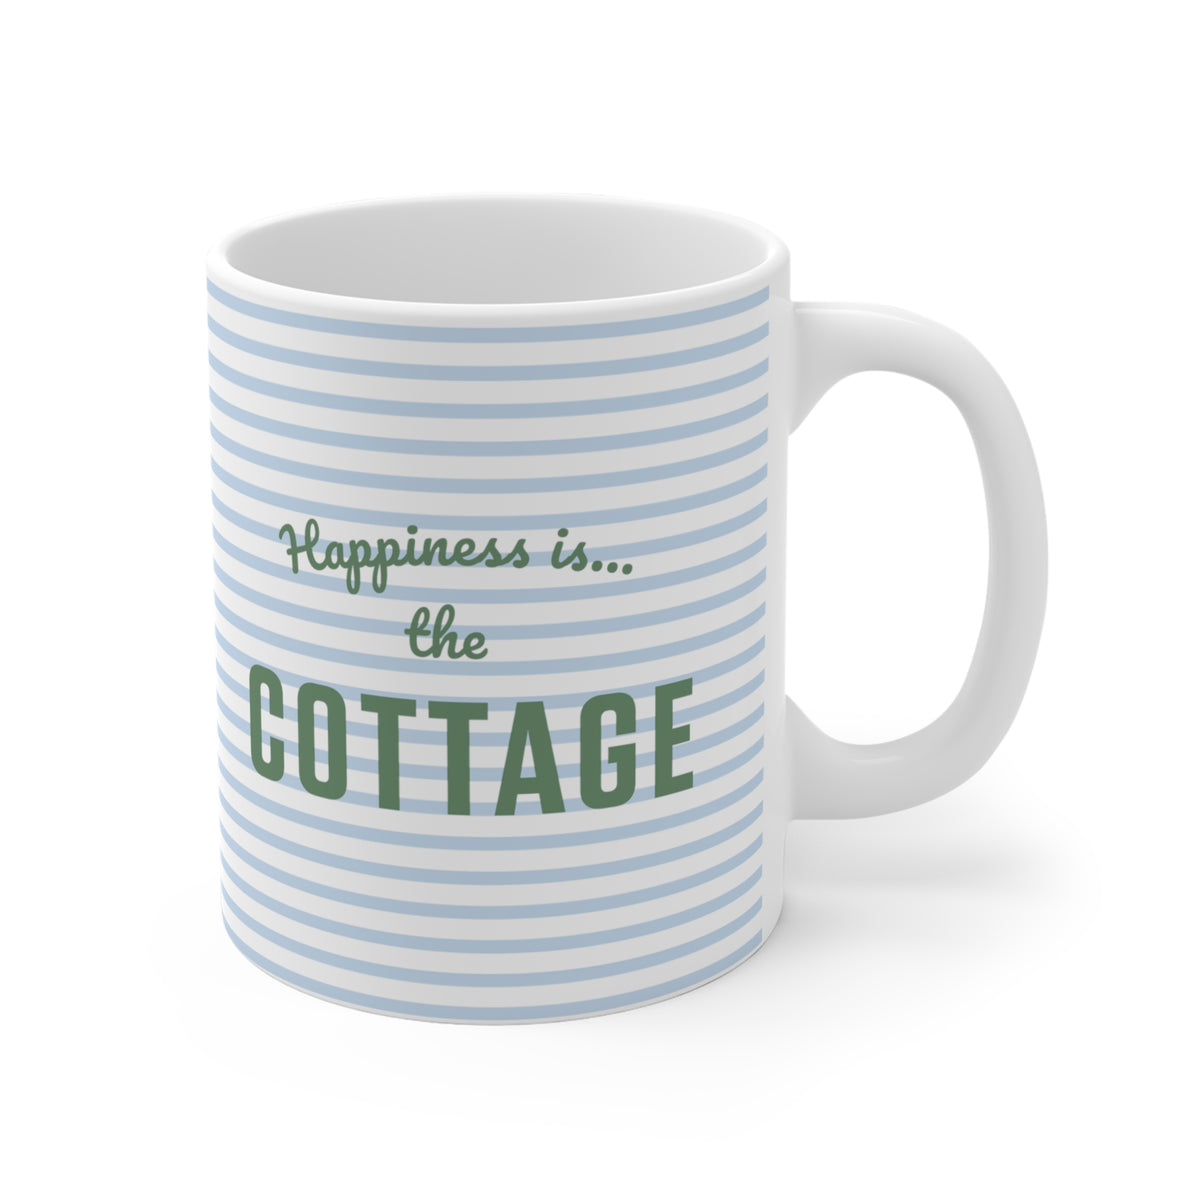 Mug: Cottage